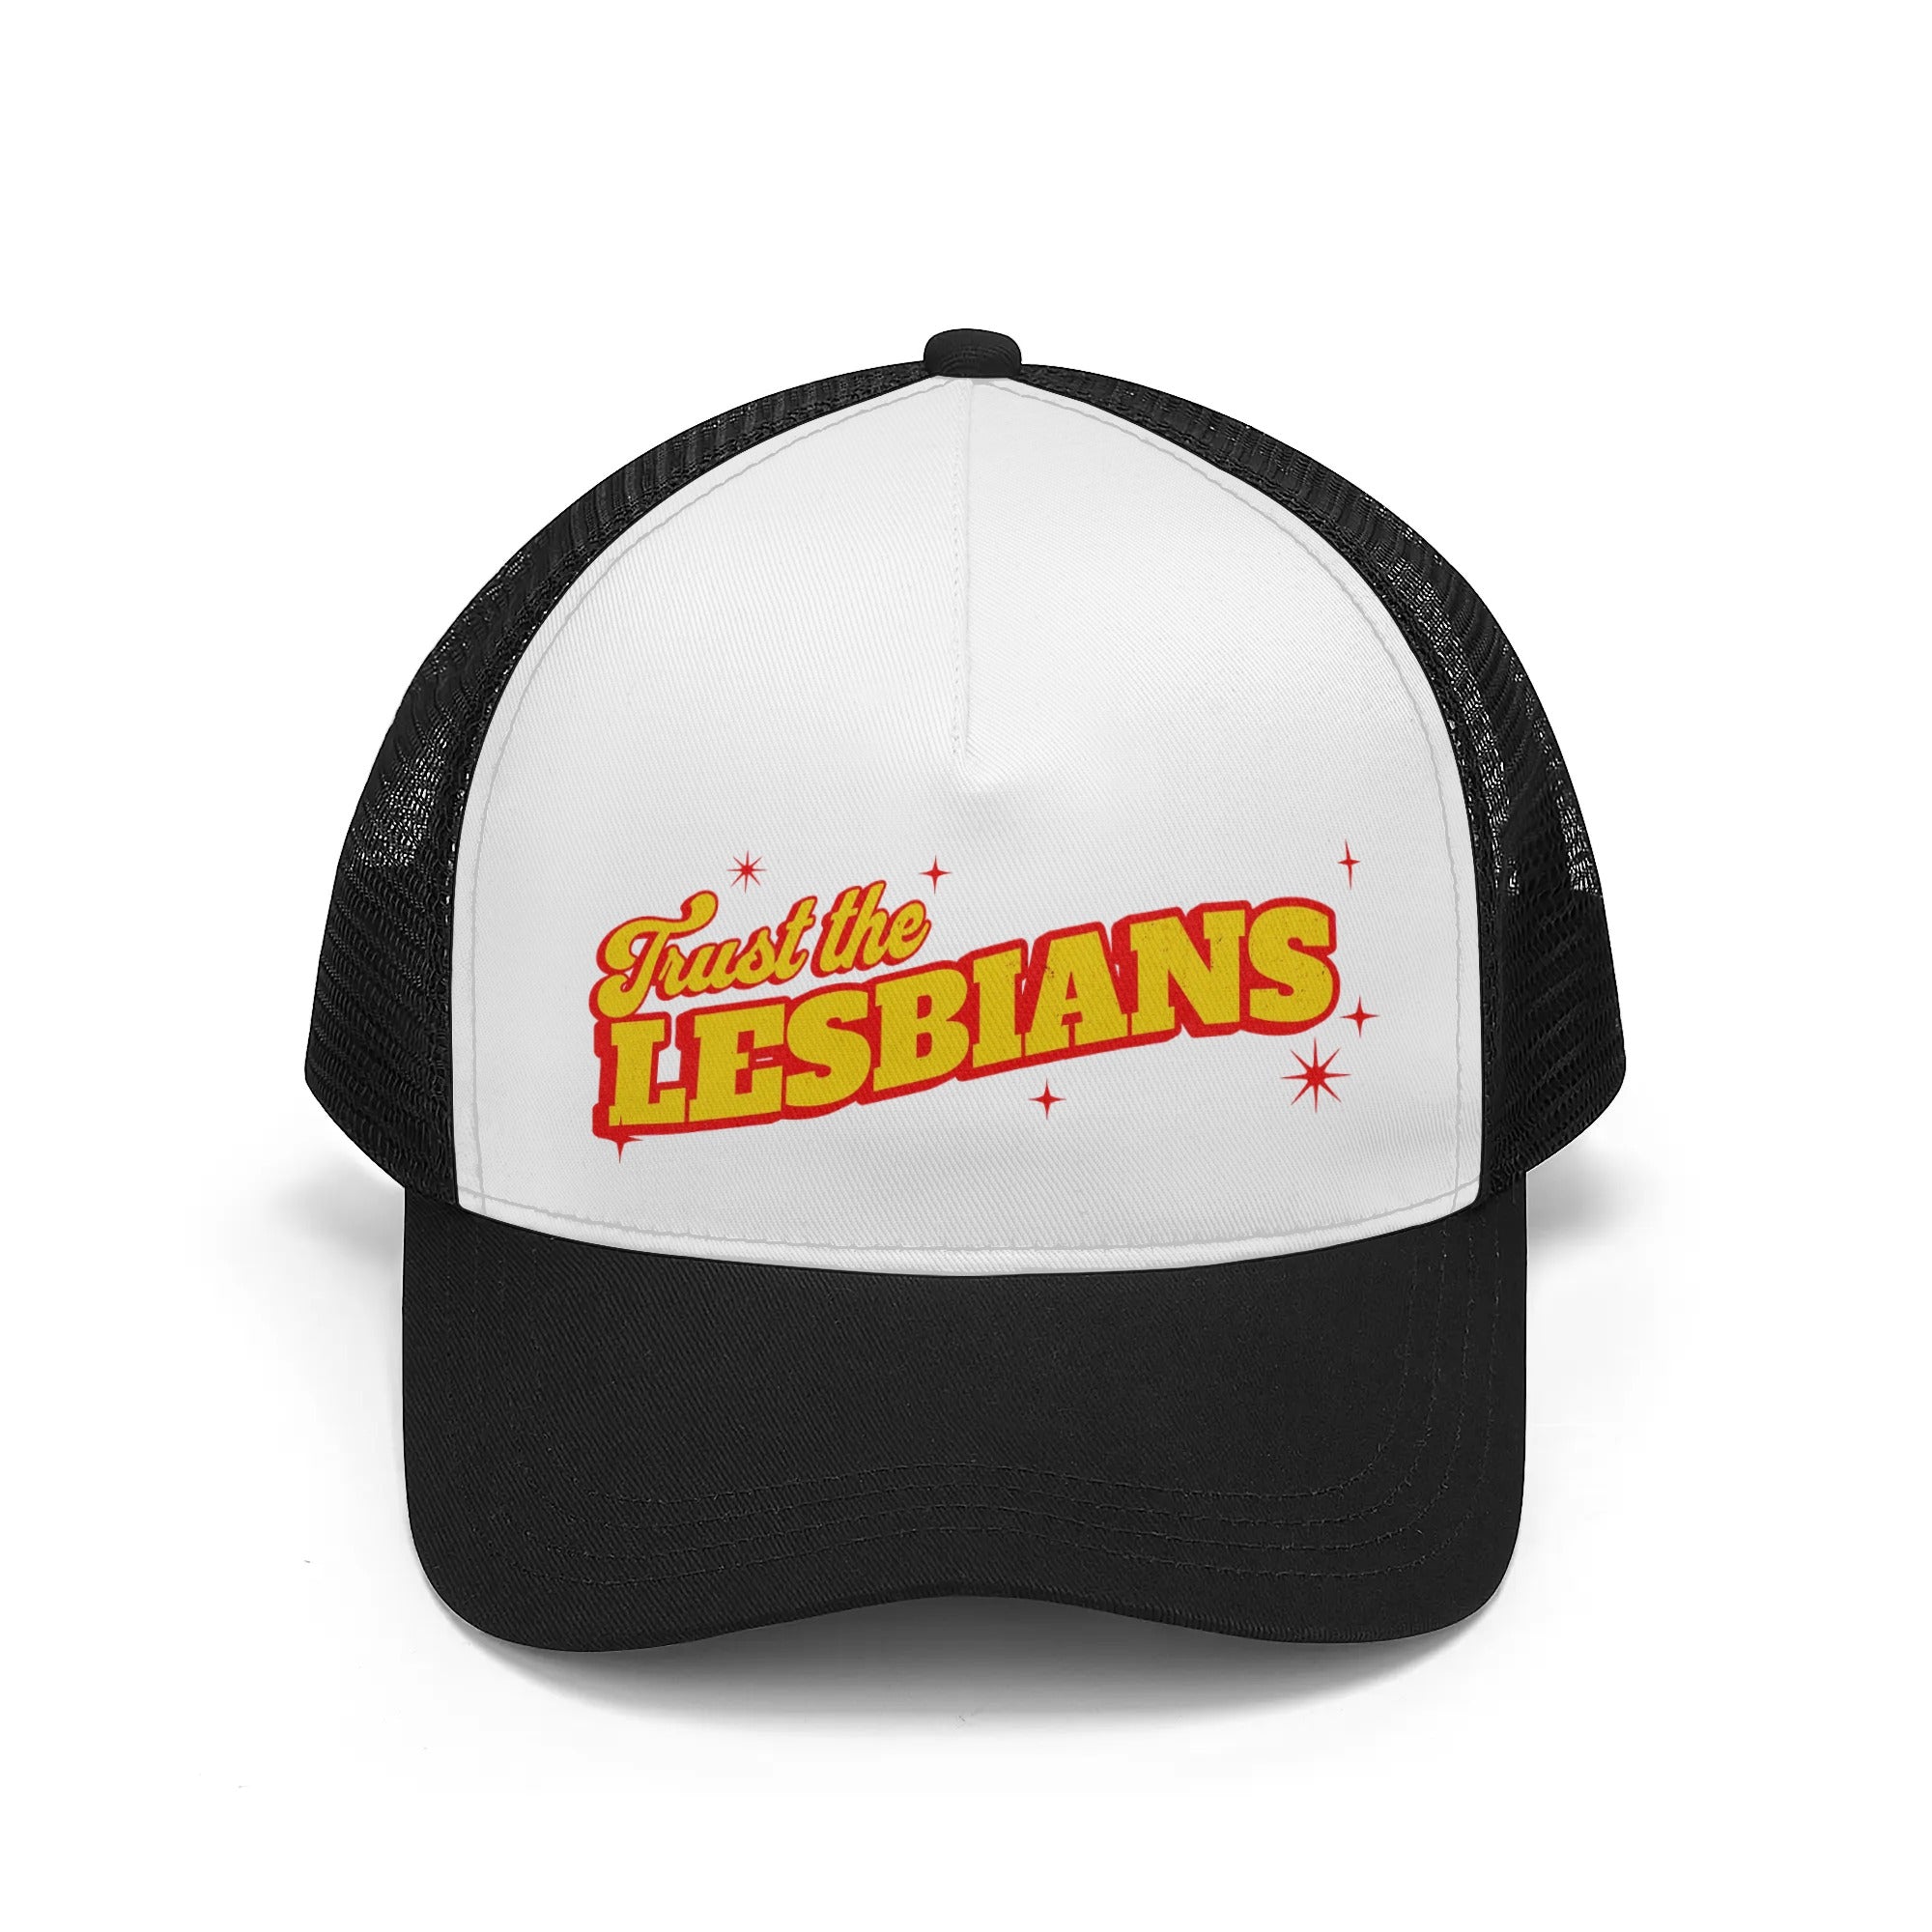 Trust The Lesbians Mesh Trucker Hats